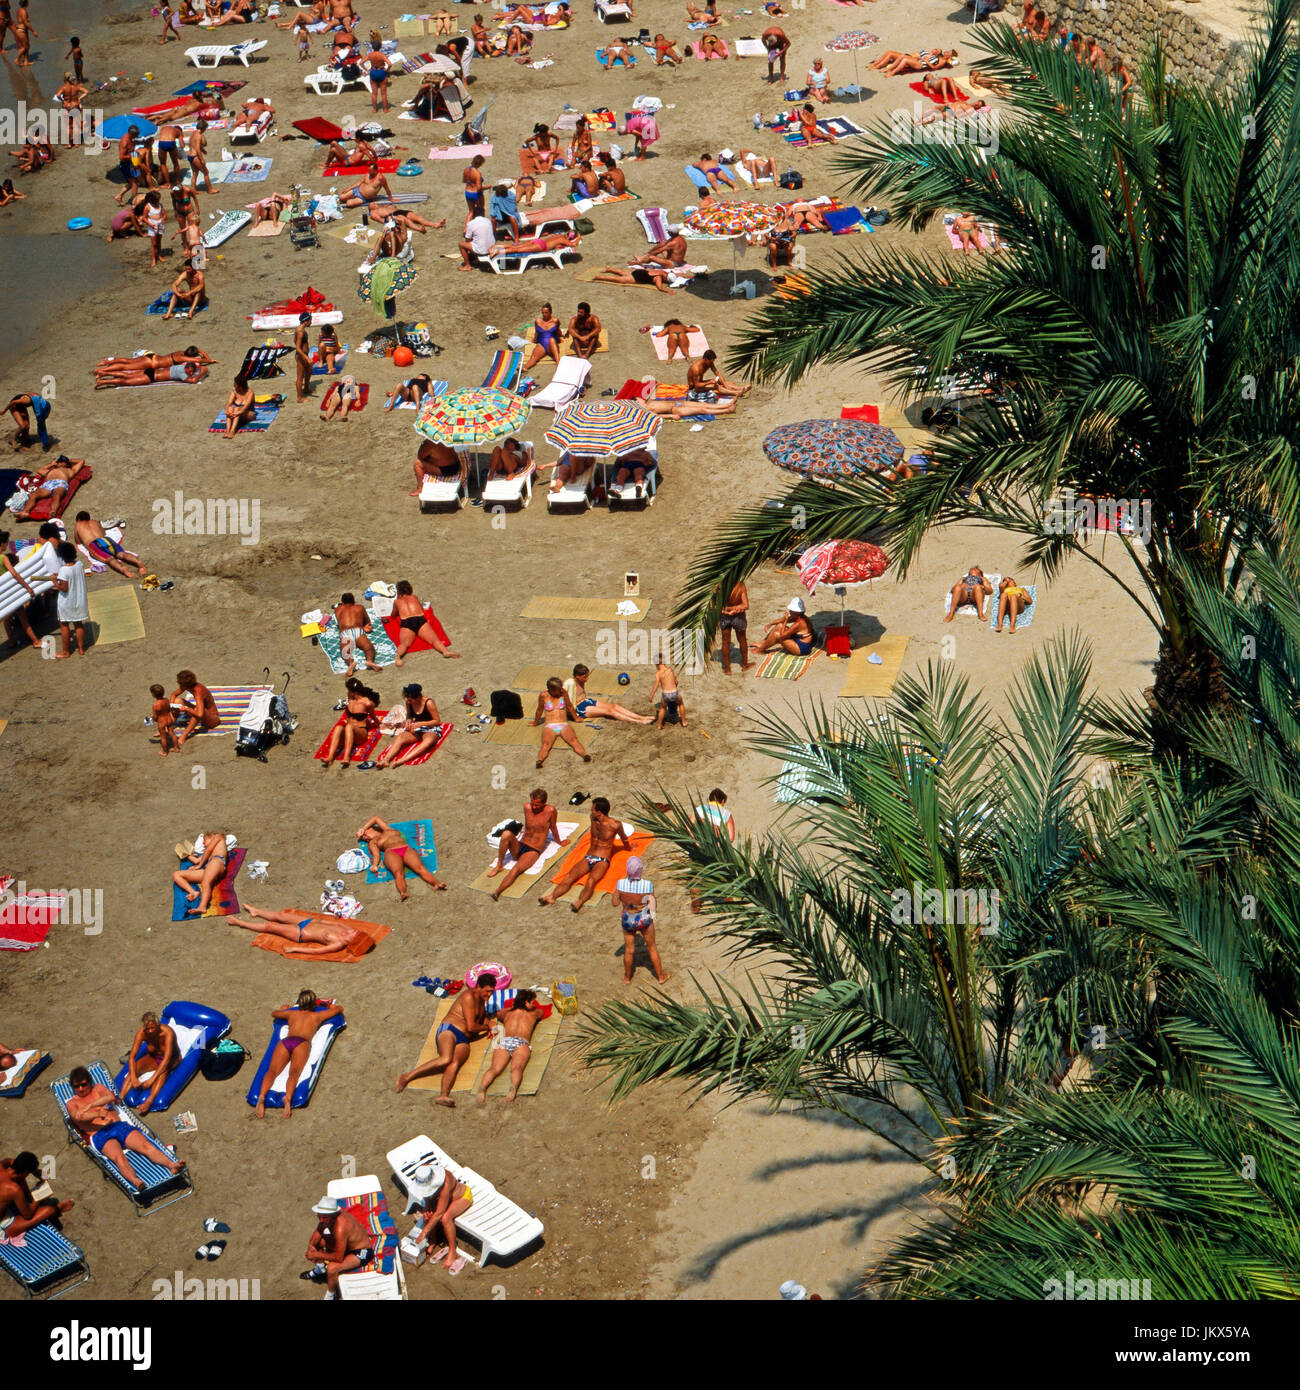 Urlauber am Strand beim sonnenbaden. Tourists sunbathing on the beach. Stock Photo